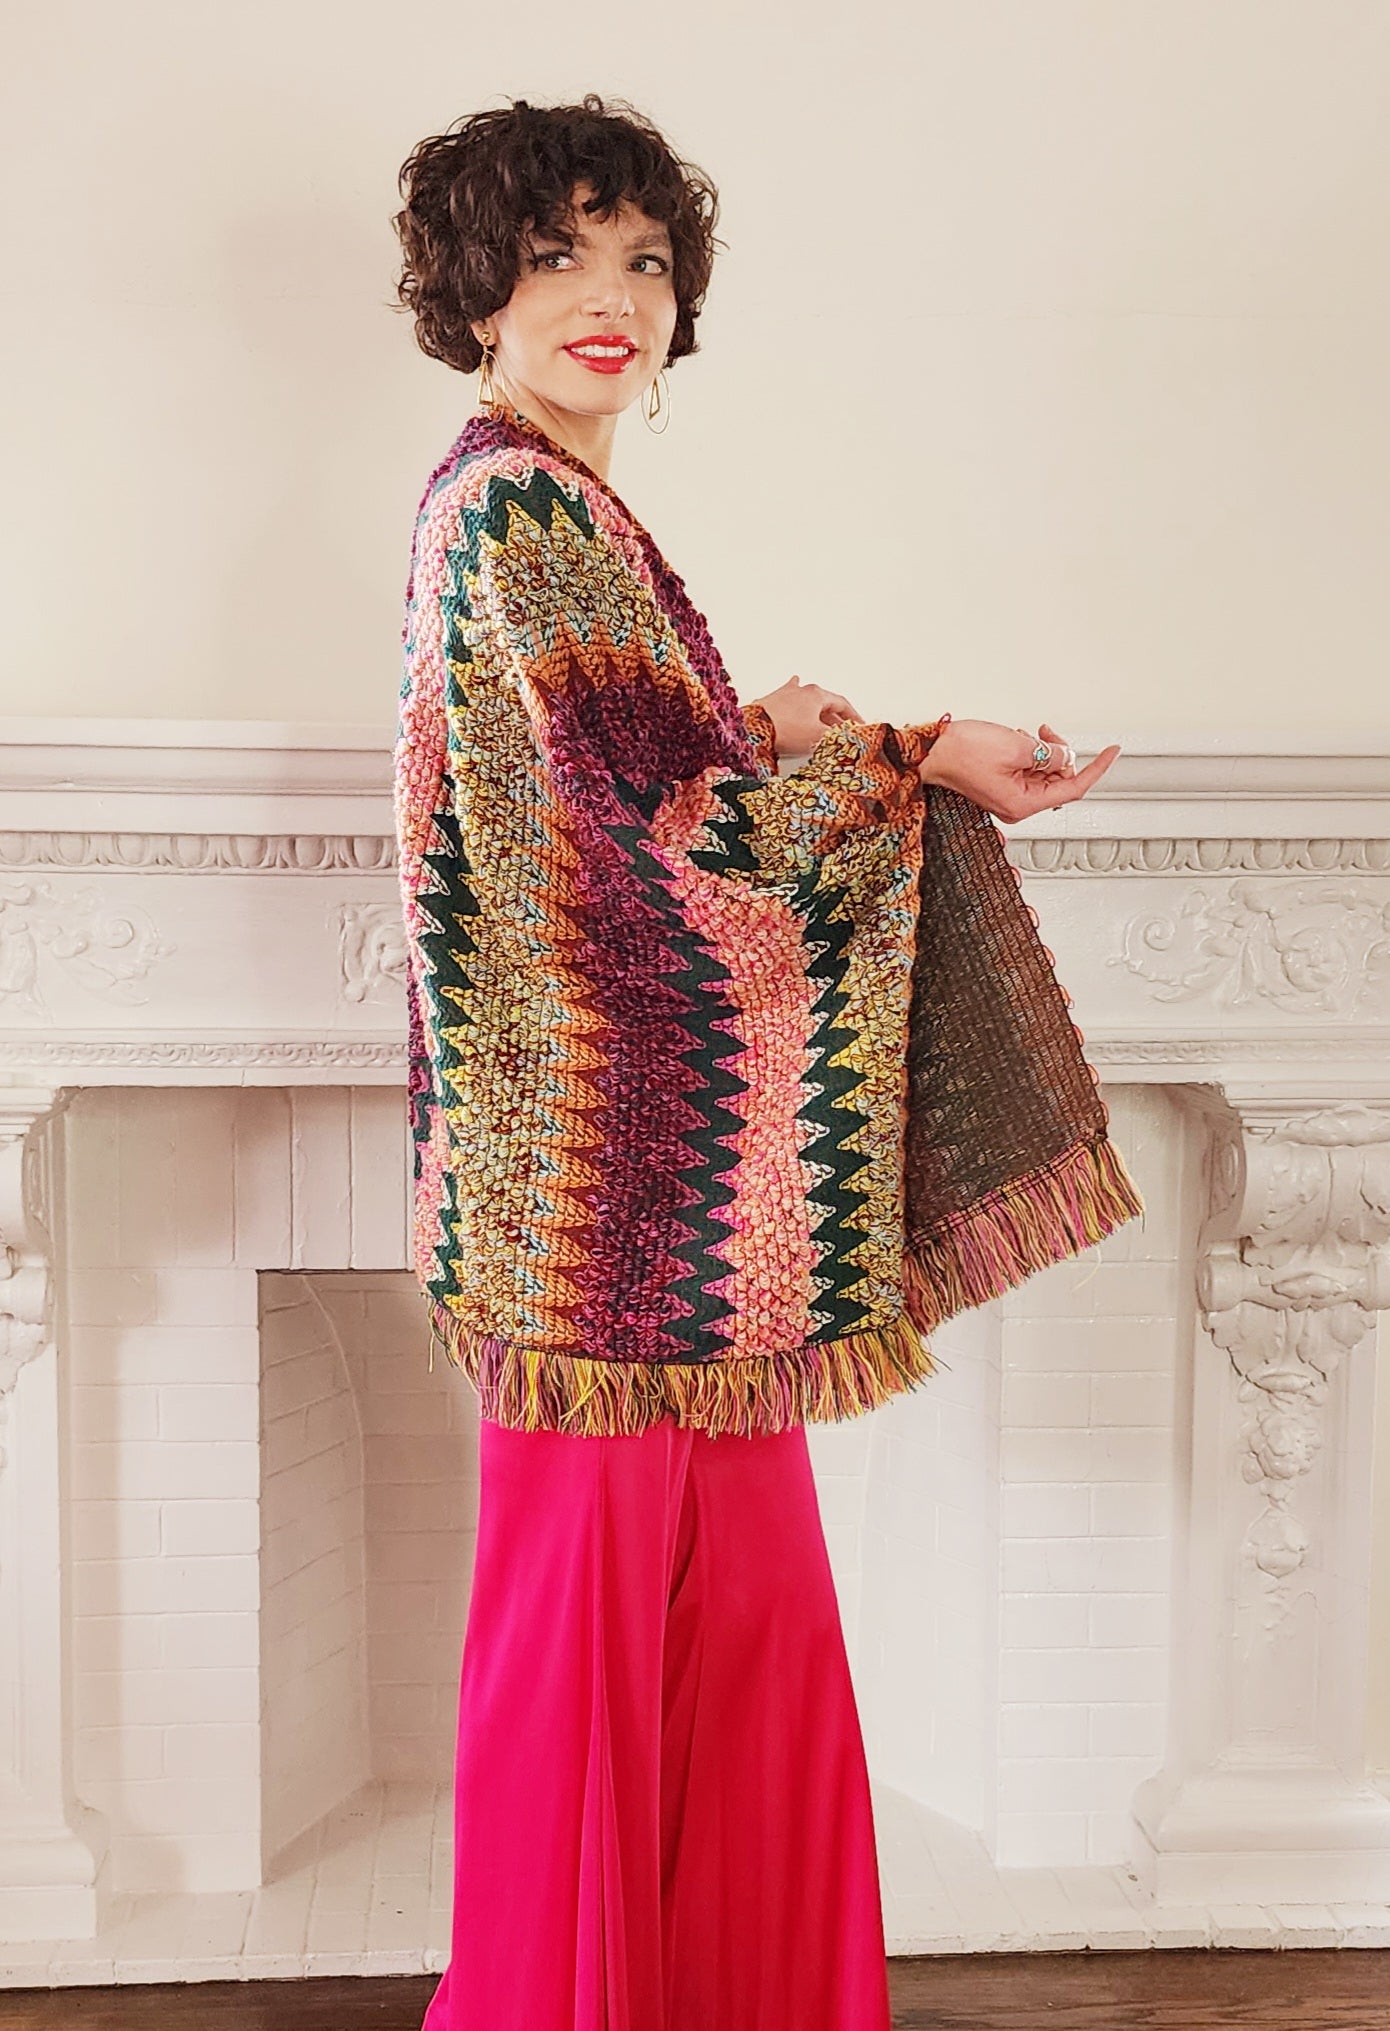 Knit Oversized Poncho in Rainbow Zigzag Pattern in Boho 70s Style